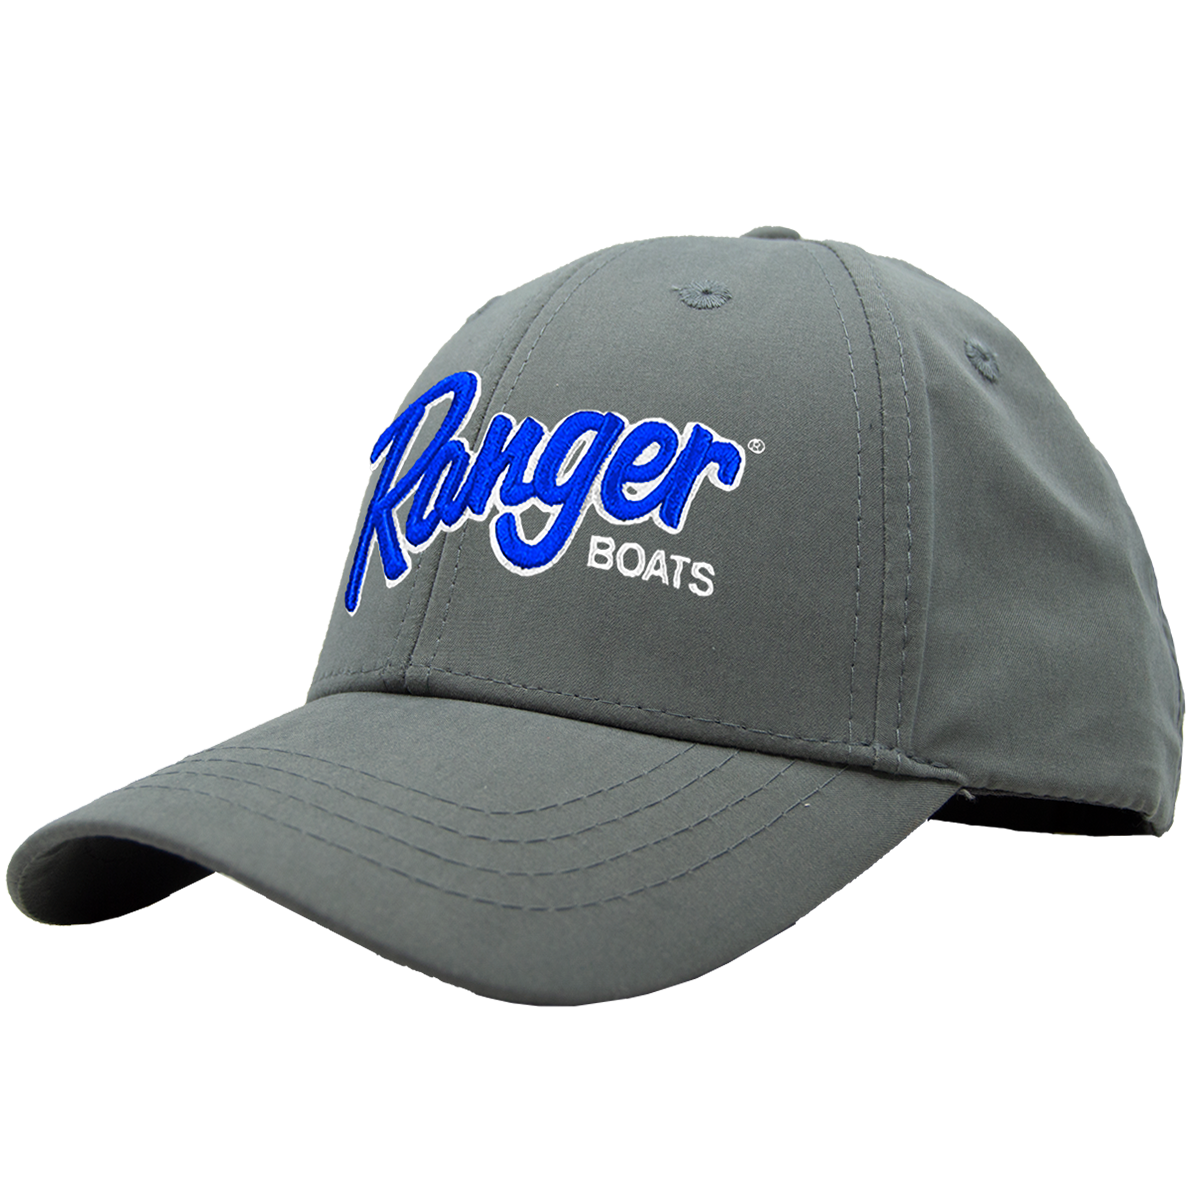 & Accessories RangerBoatsGear Hats -